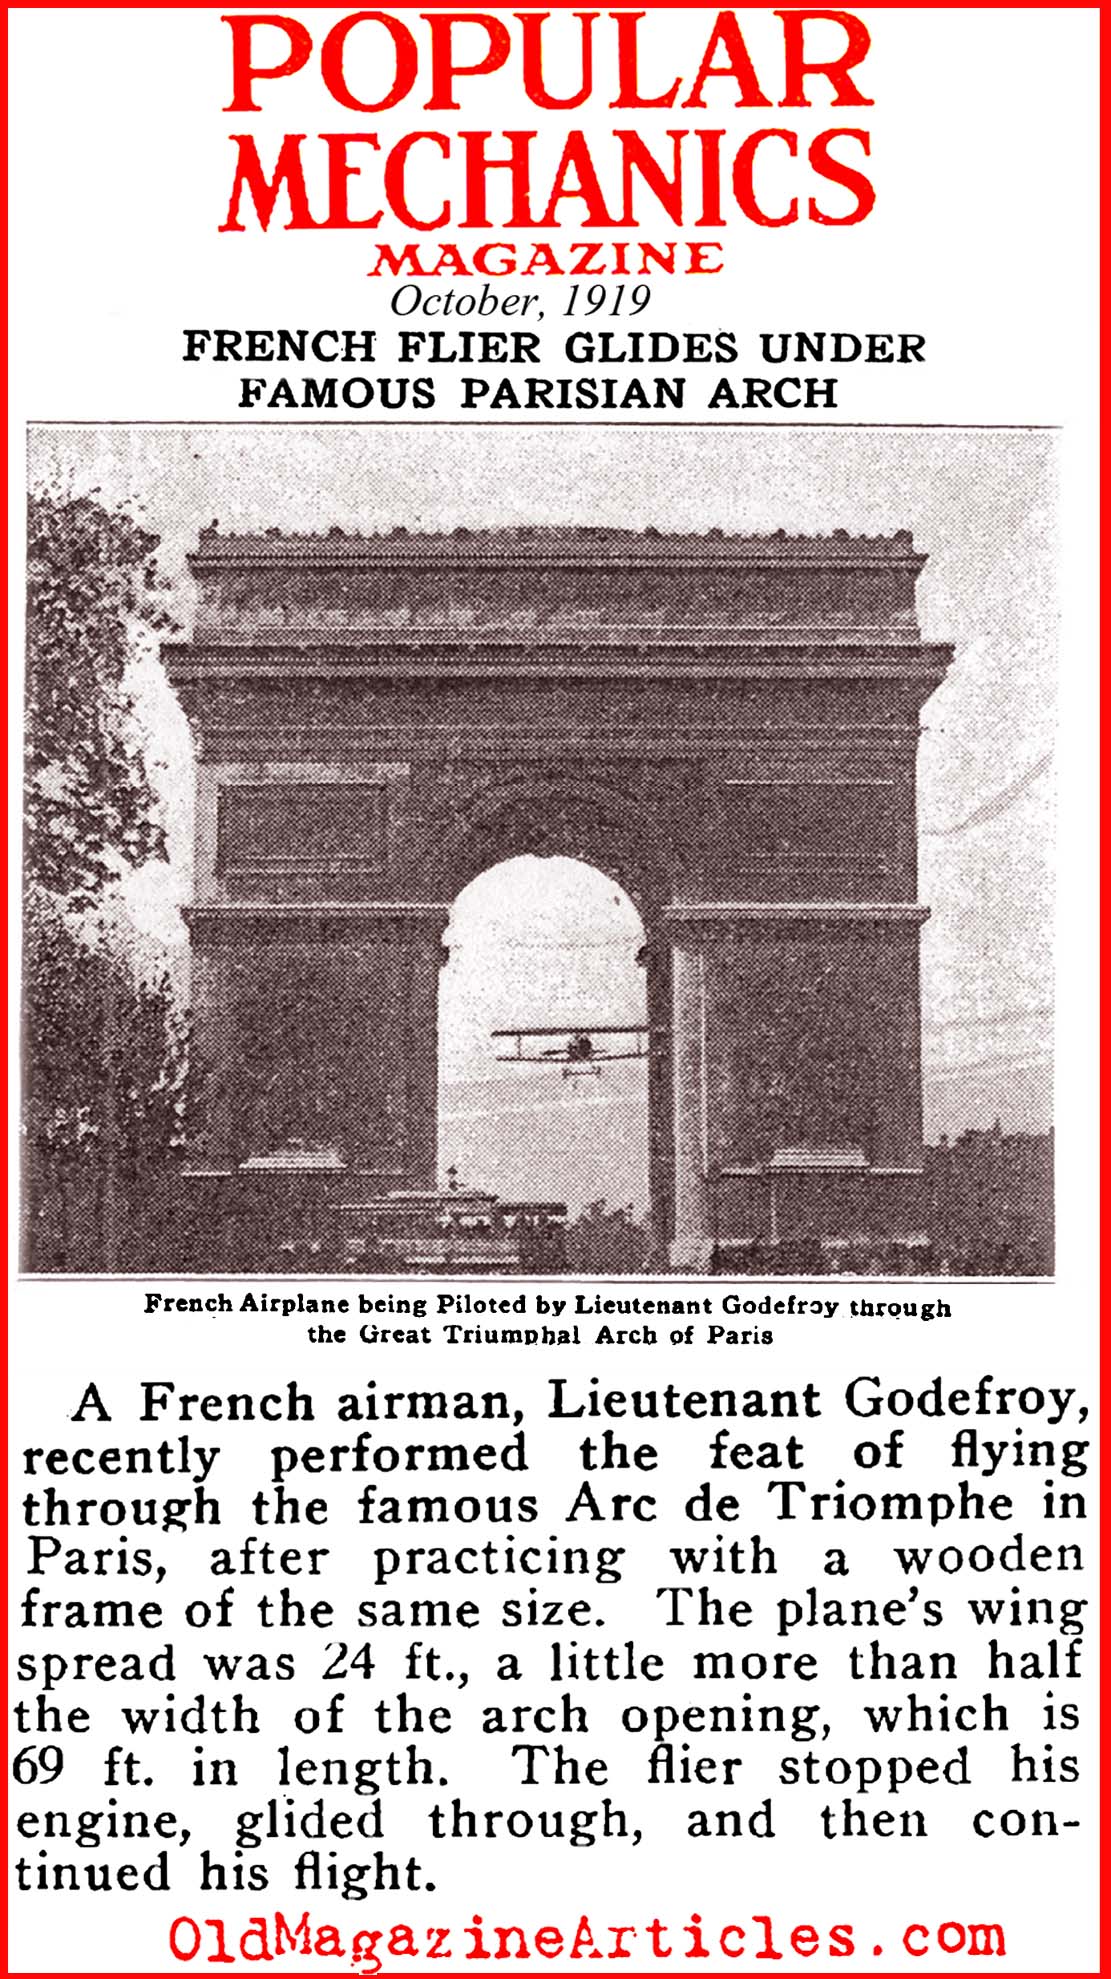 French Pilot Glides Under the Arc de Triomphe (Popular Mechanics, 1919)